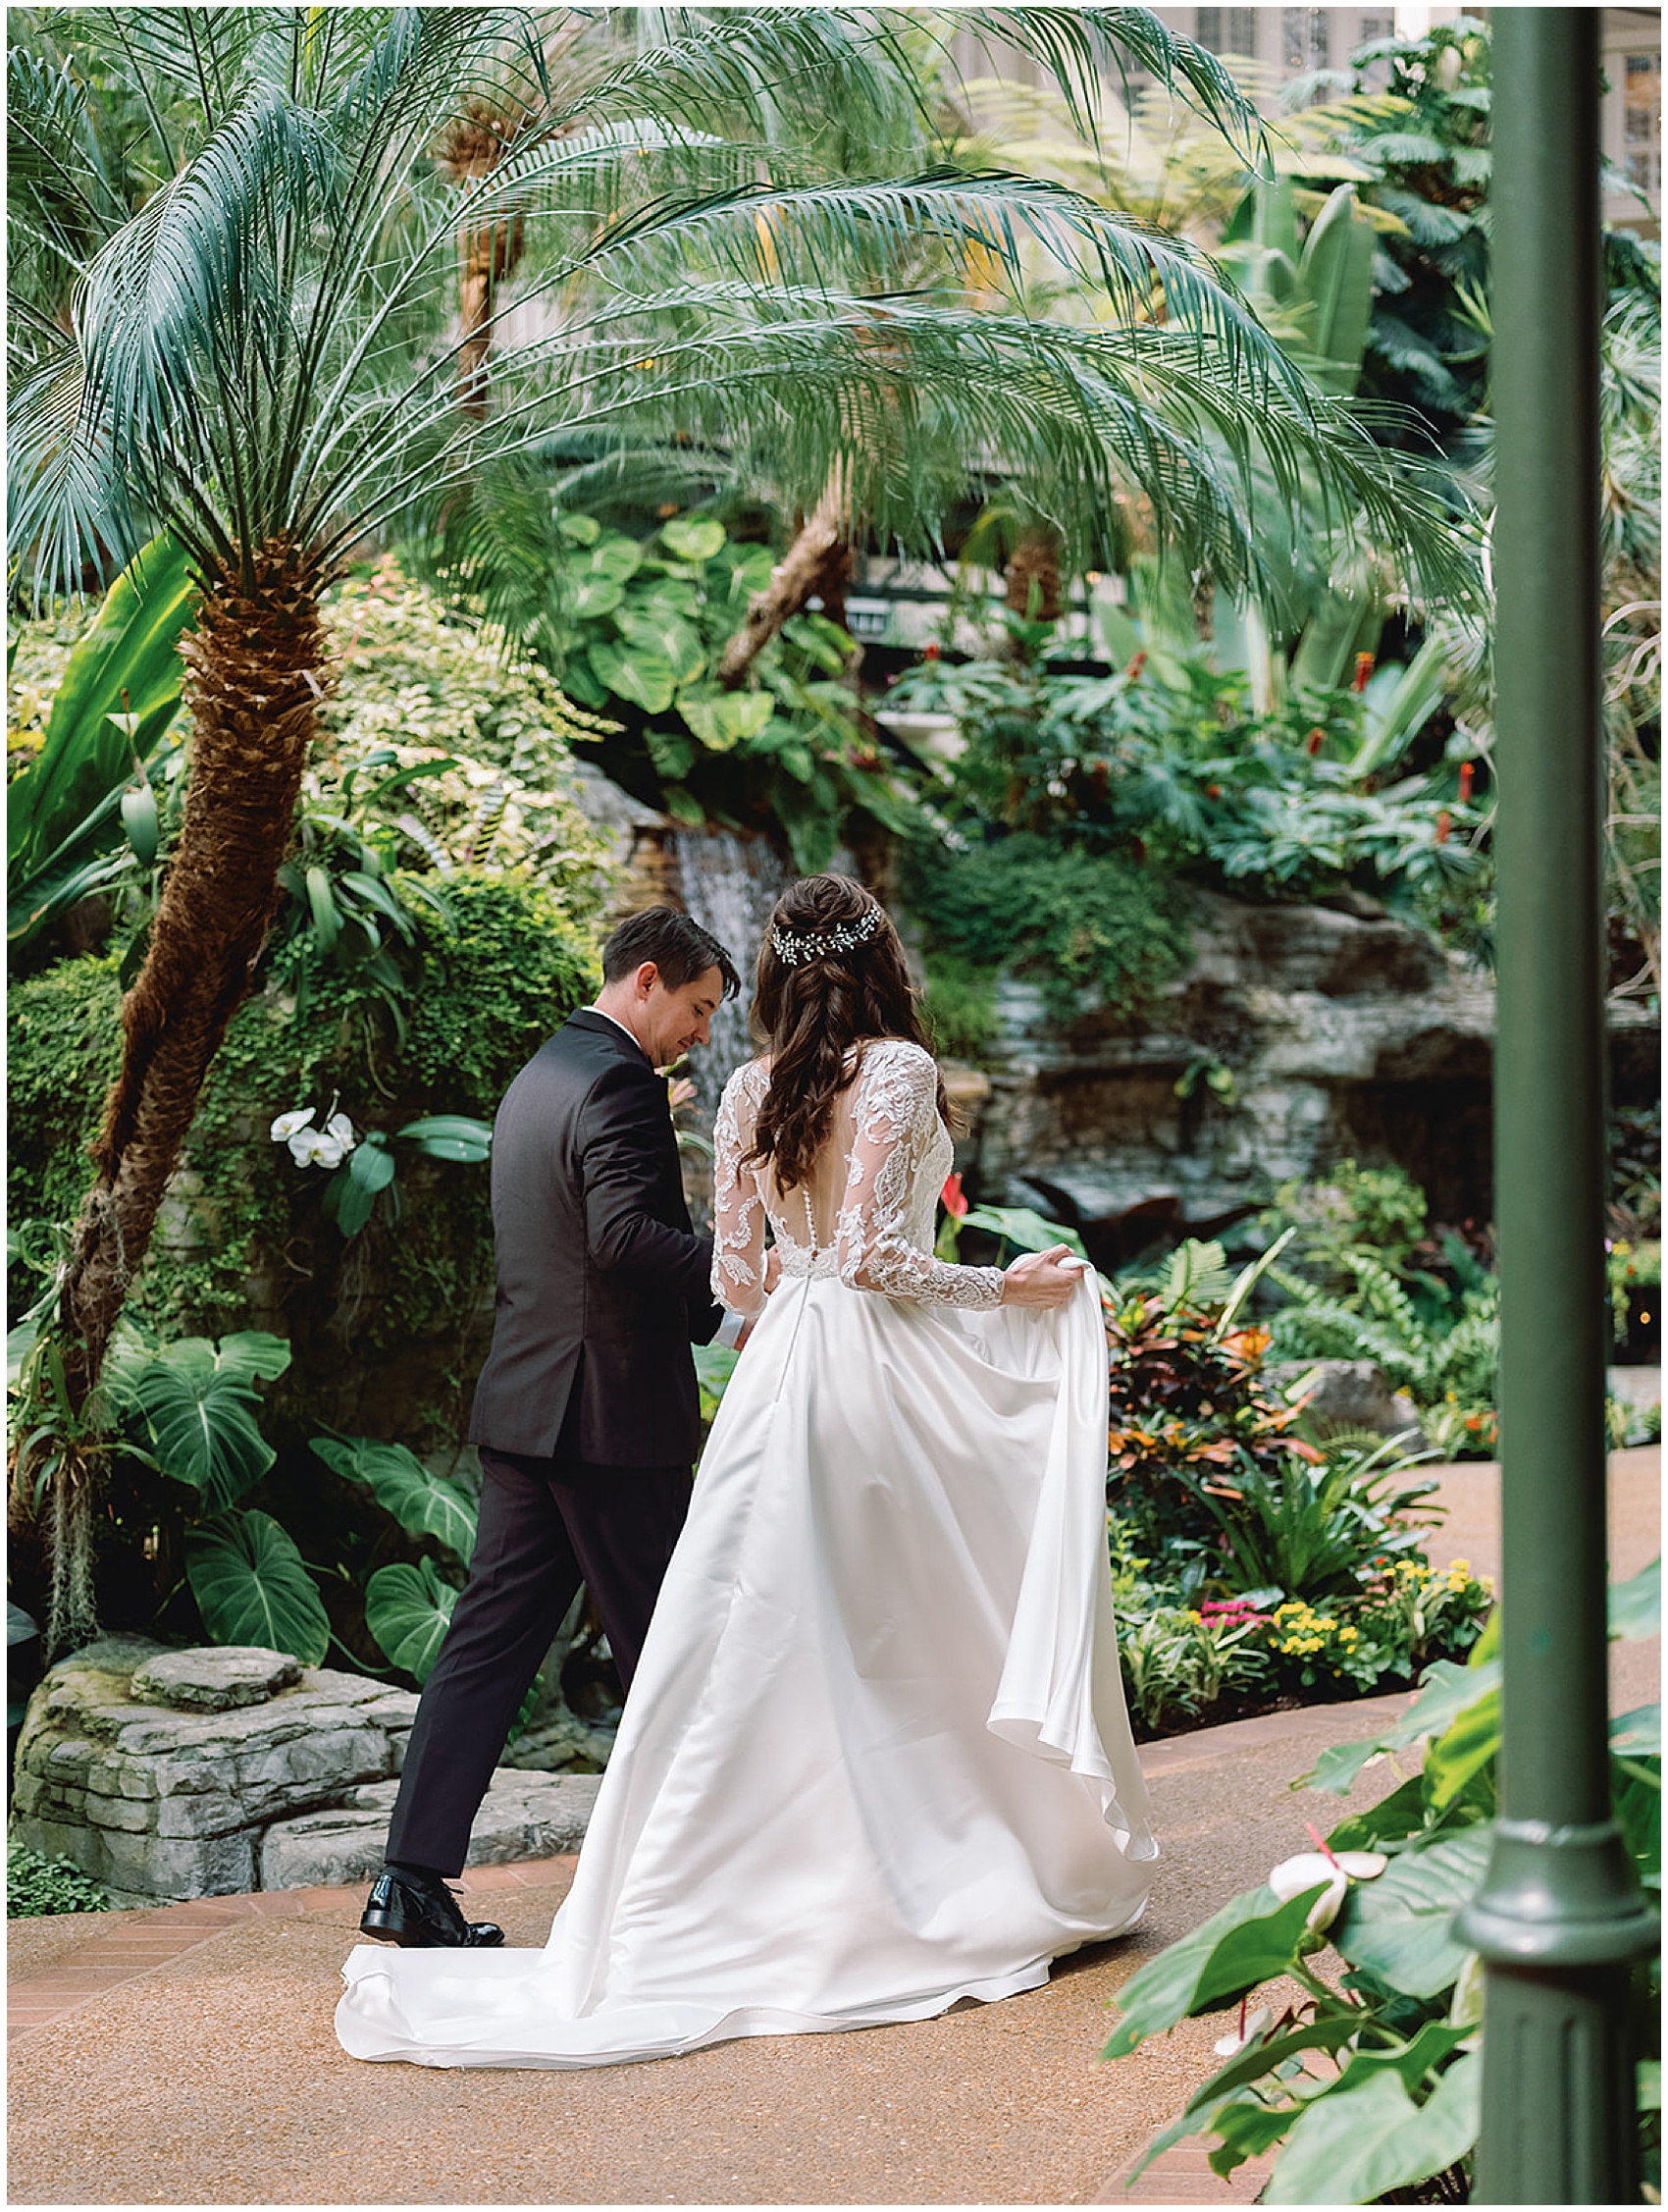 A bride and groom walk through an indoor tropical garden holding hands